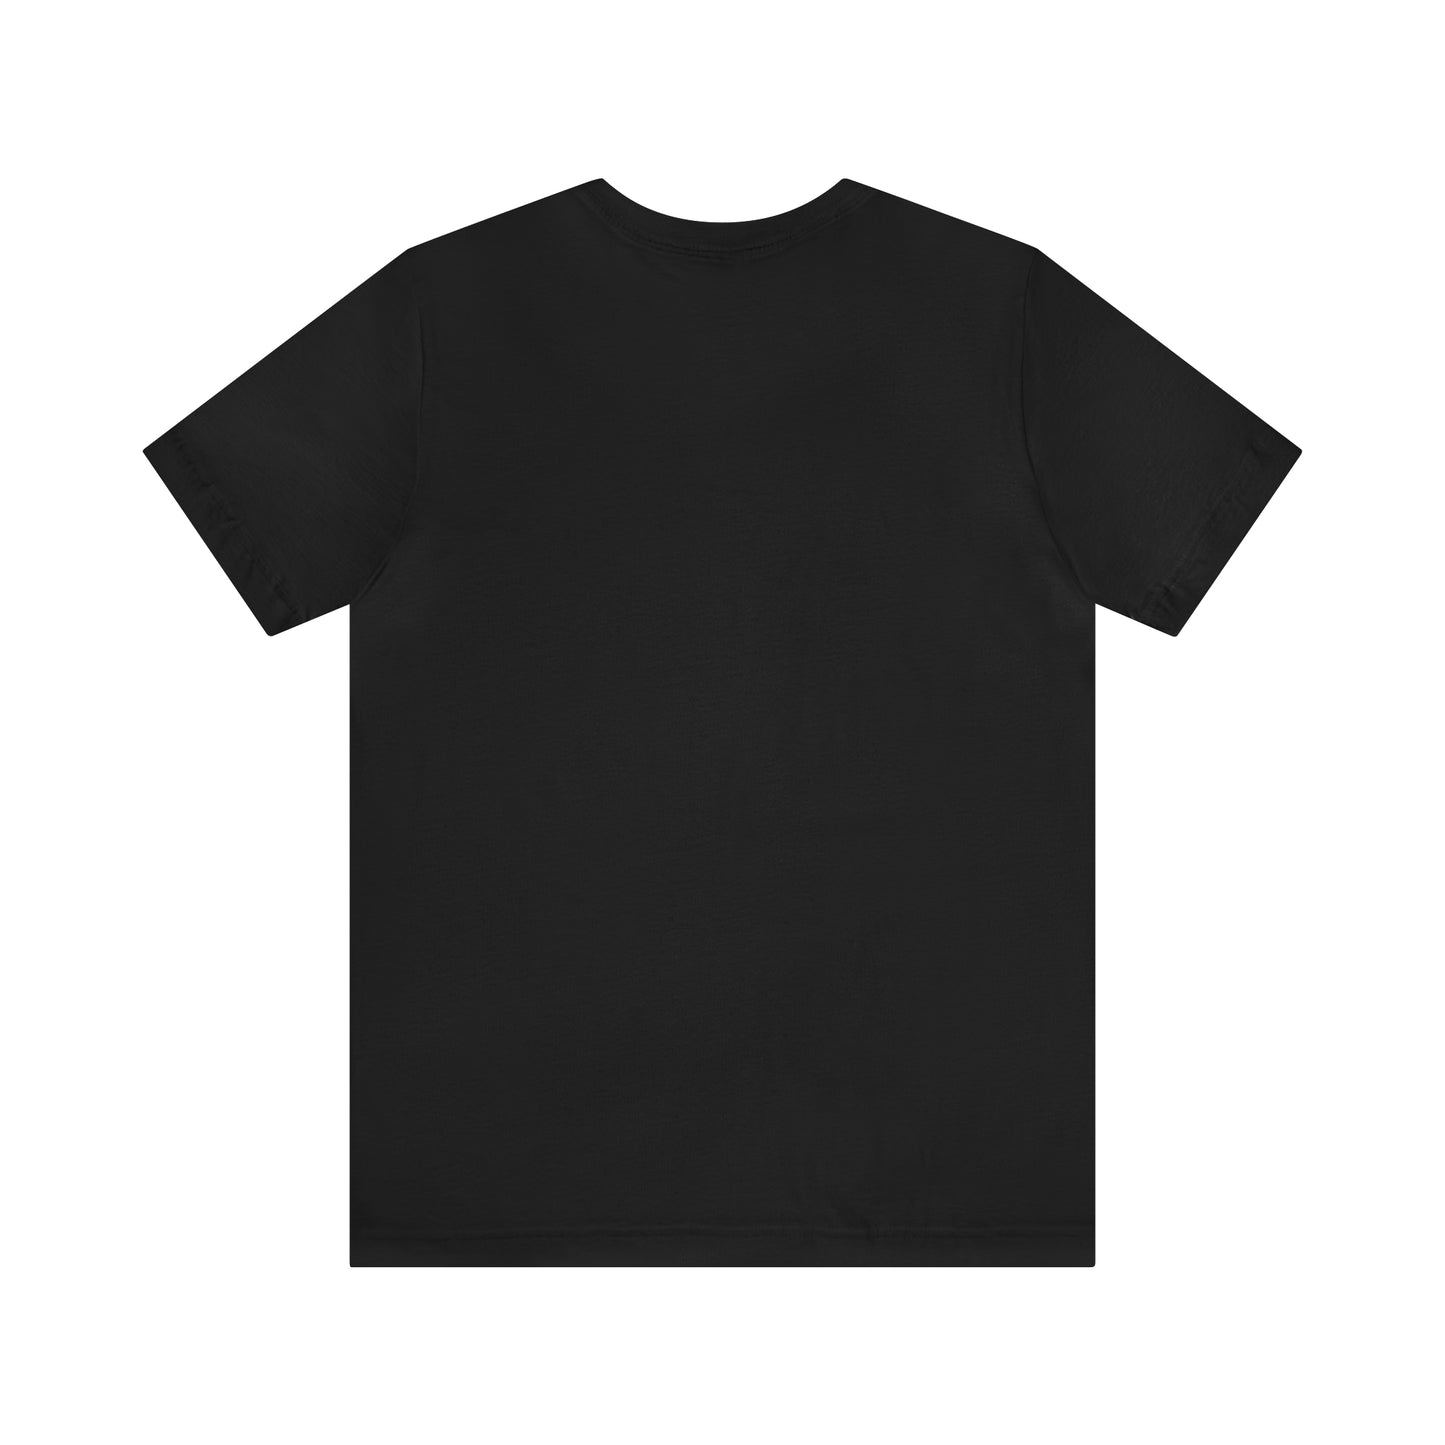 Marshfield, Mass Pickleball Short Sleeve T-Shirt